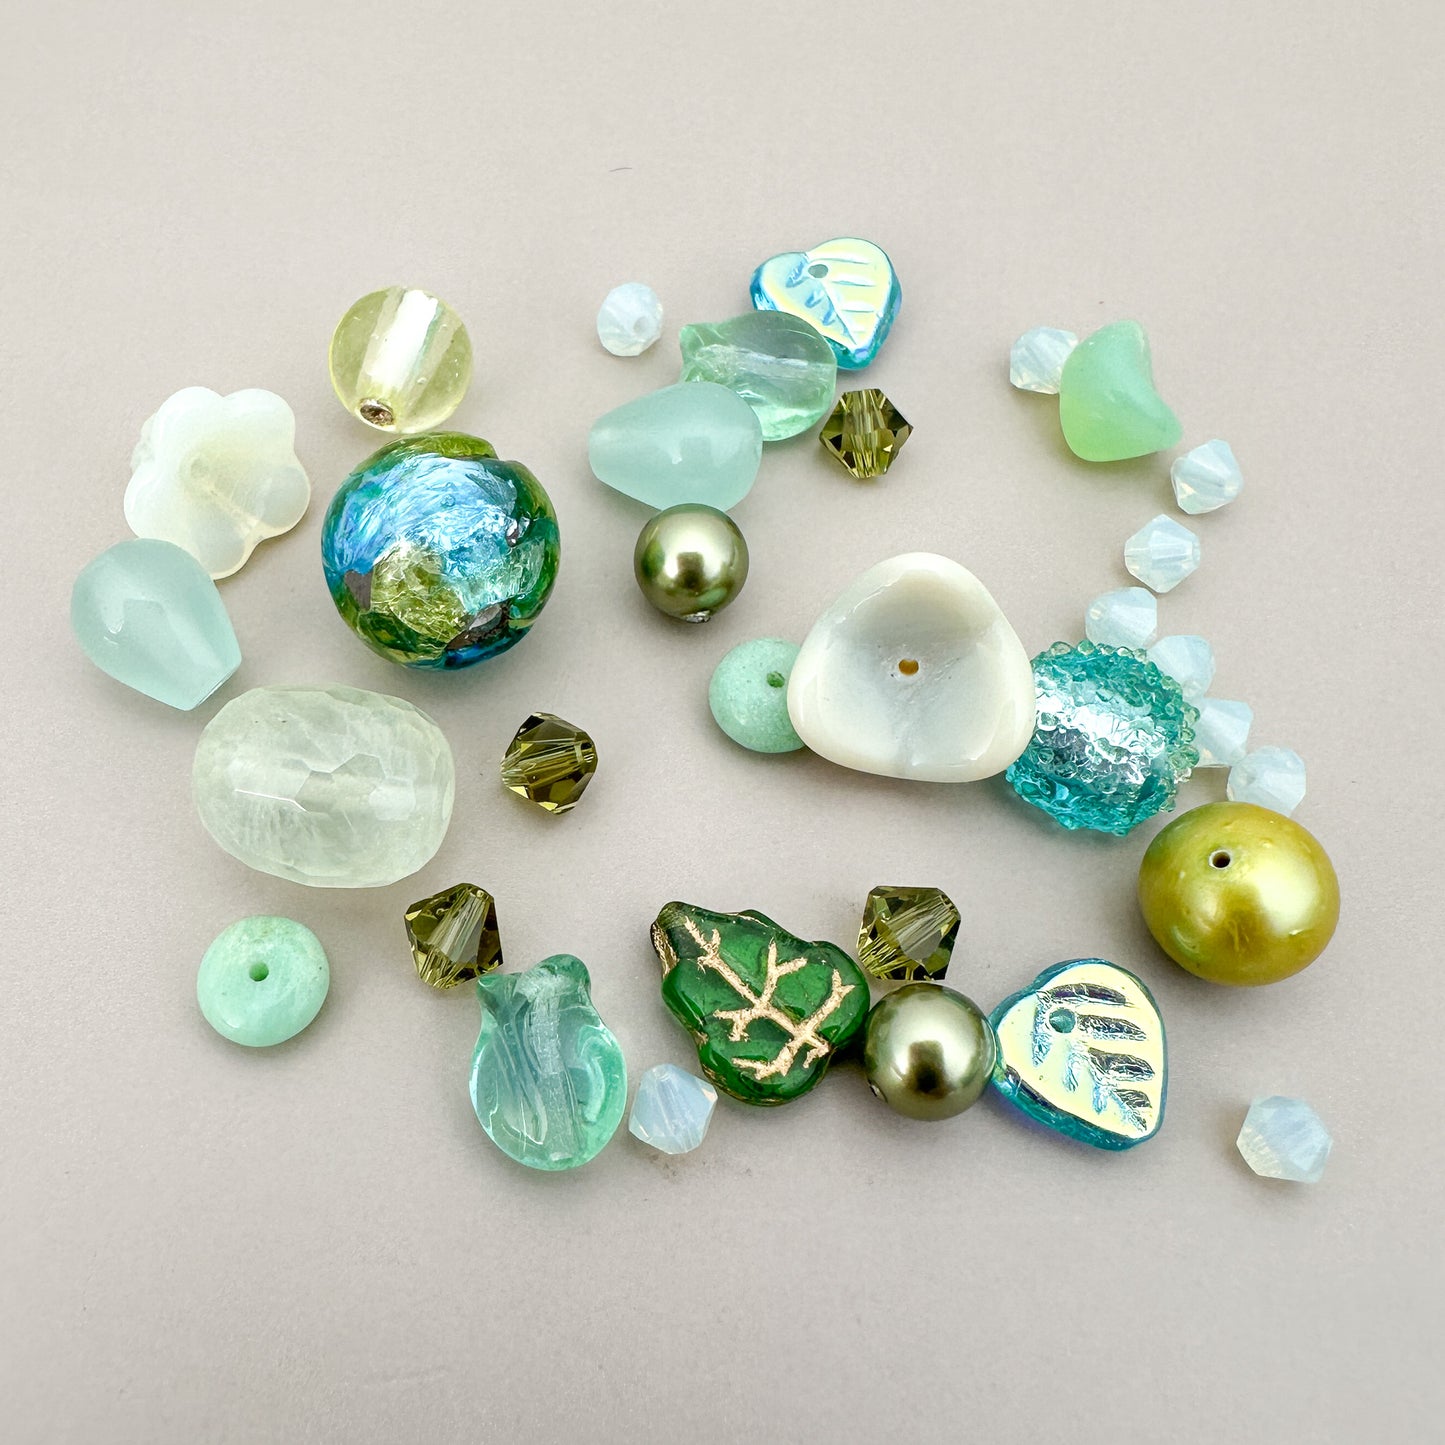 Fairy Core Vintage and Contemporary Glass Bead Mix - 33 pcs. (MIX106)